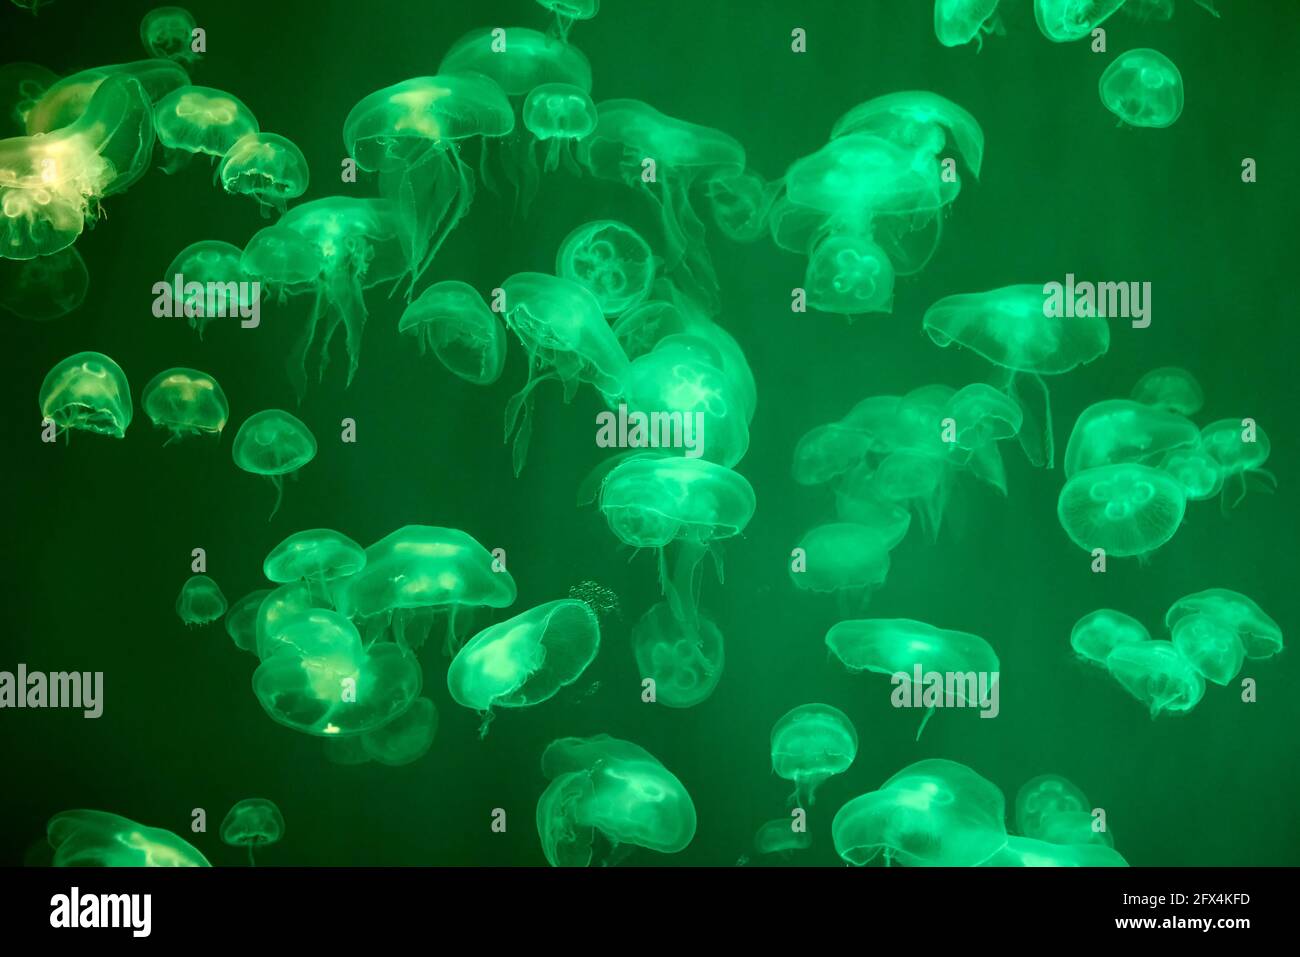 Aurelia aurita, otherwise known as common or moon jellyfish is found in fish tank of marine aquarium. Stock Photo